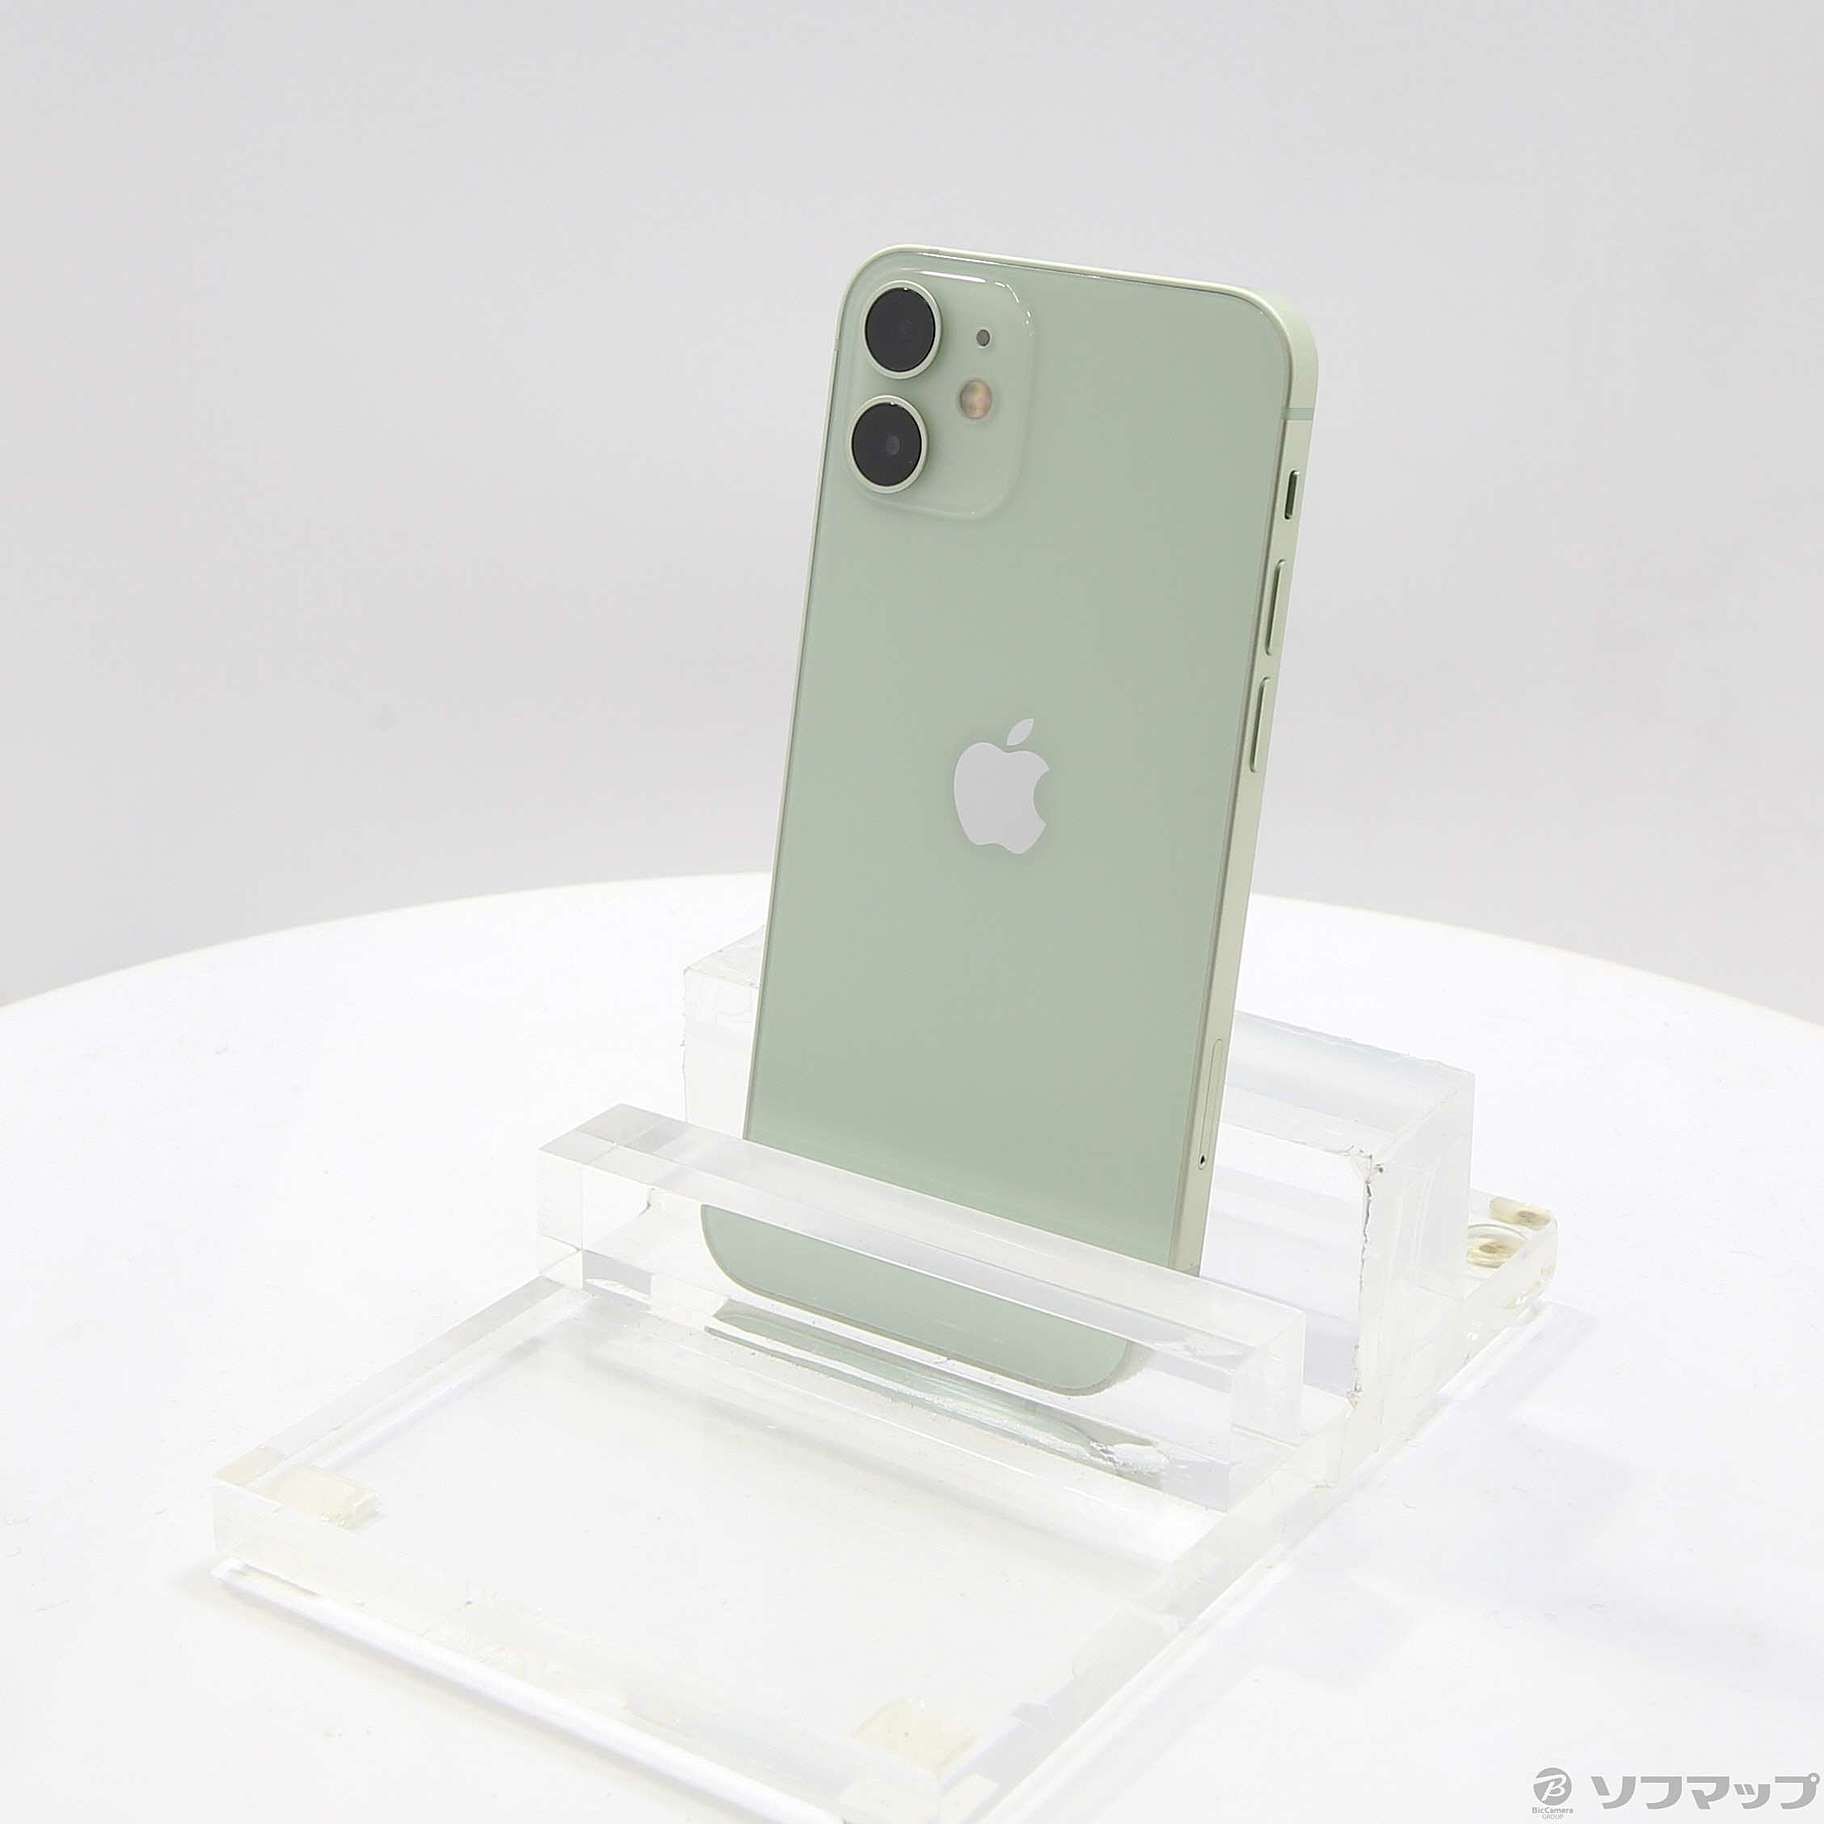 iPhone 12 mini 64GB SIMフリー [グリーン] 中古(白ロム)価格比較 - 価格.com